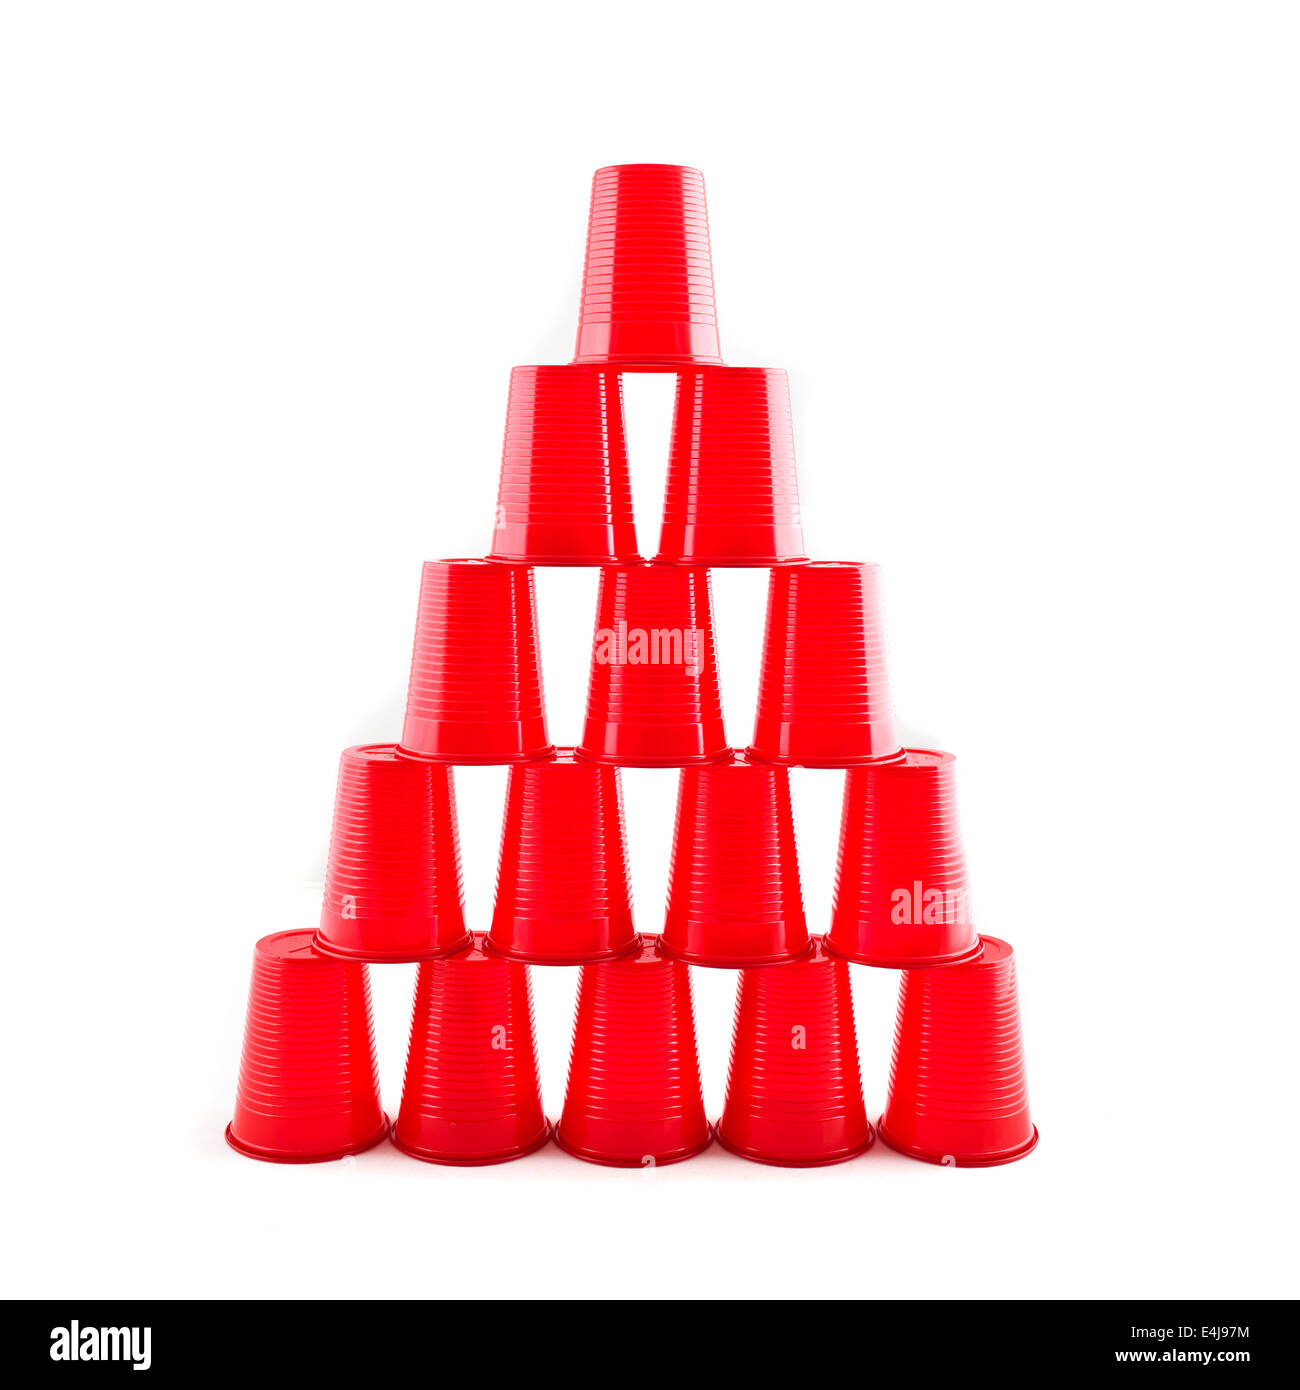 https://c8.alamy.com/comp/E4J97M/empty-plastic-red-cups-pyramid-on-white-background-E4J97M.jpg